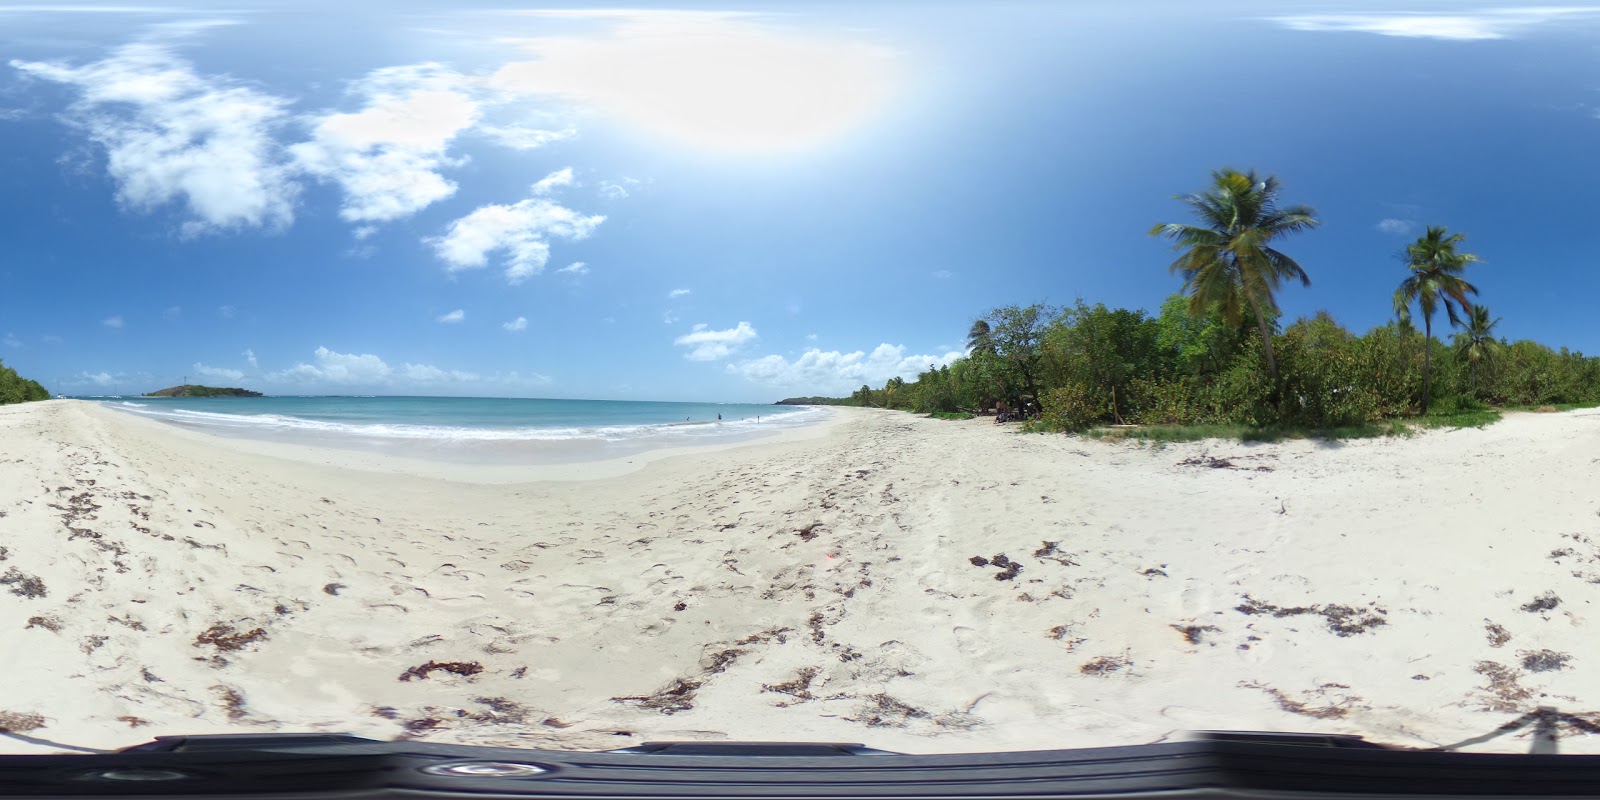 Foto de Grande terre beach - lugar popular entre os apreciadores de relaxamento